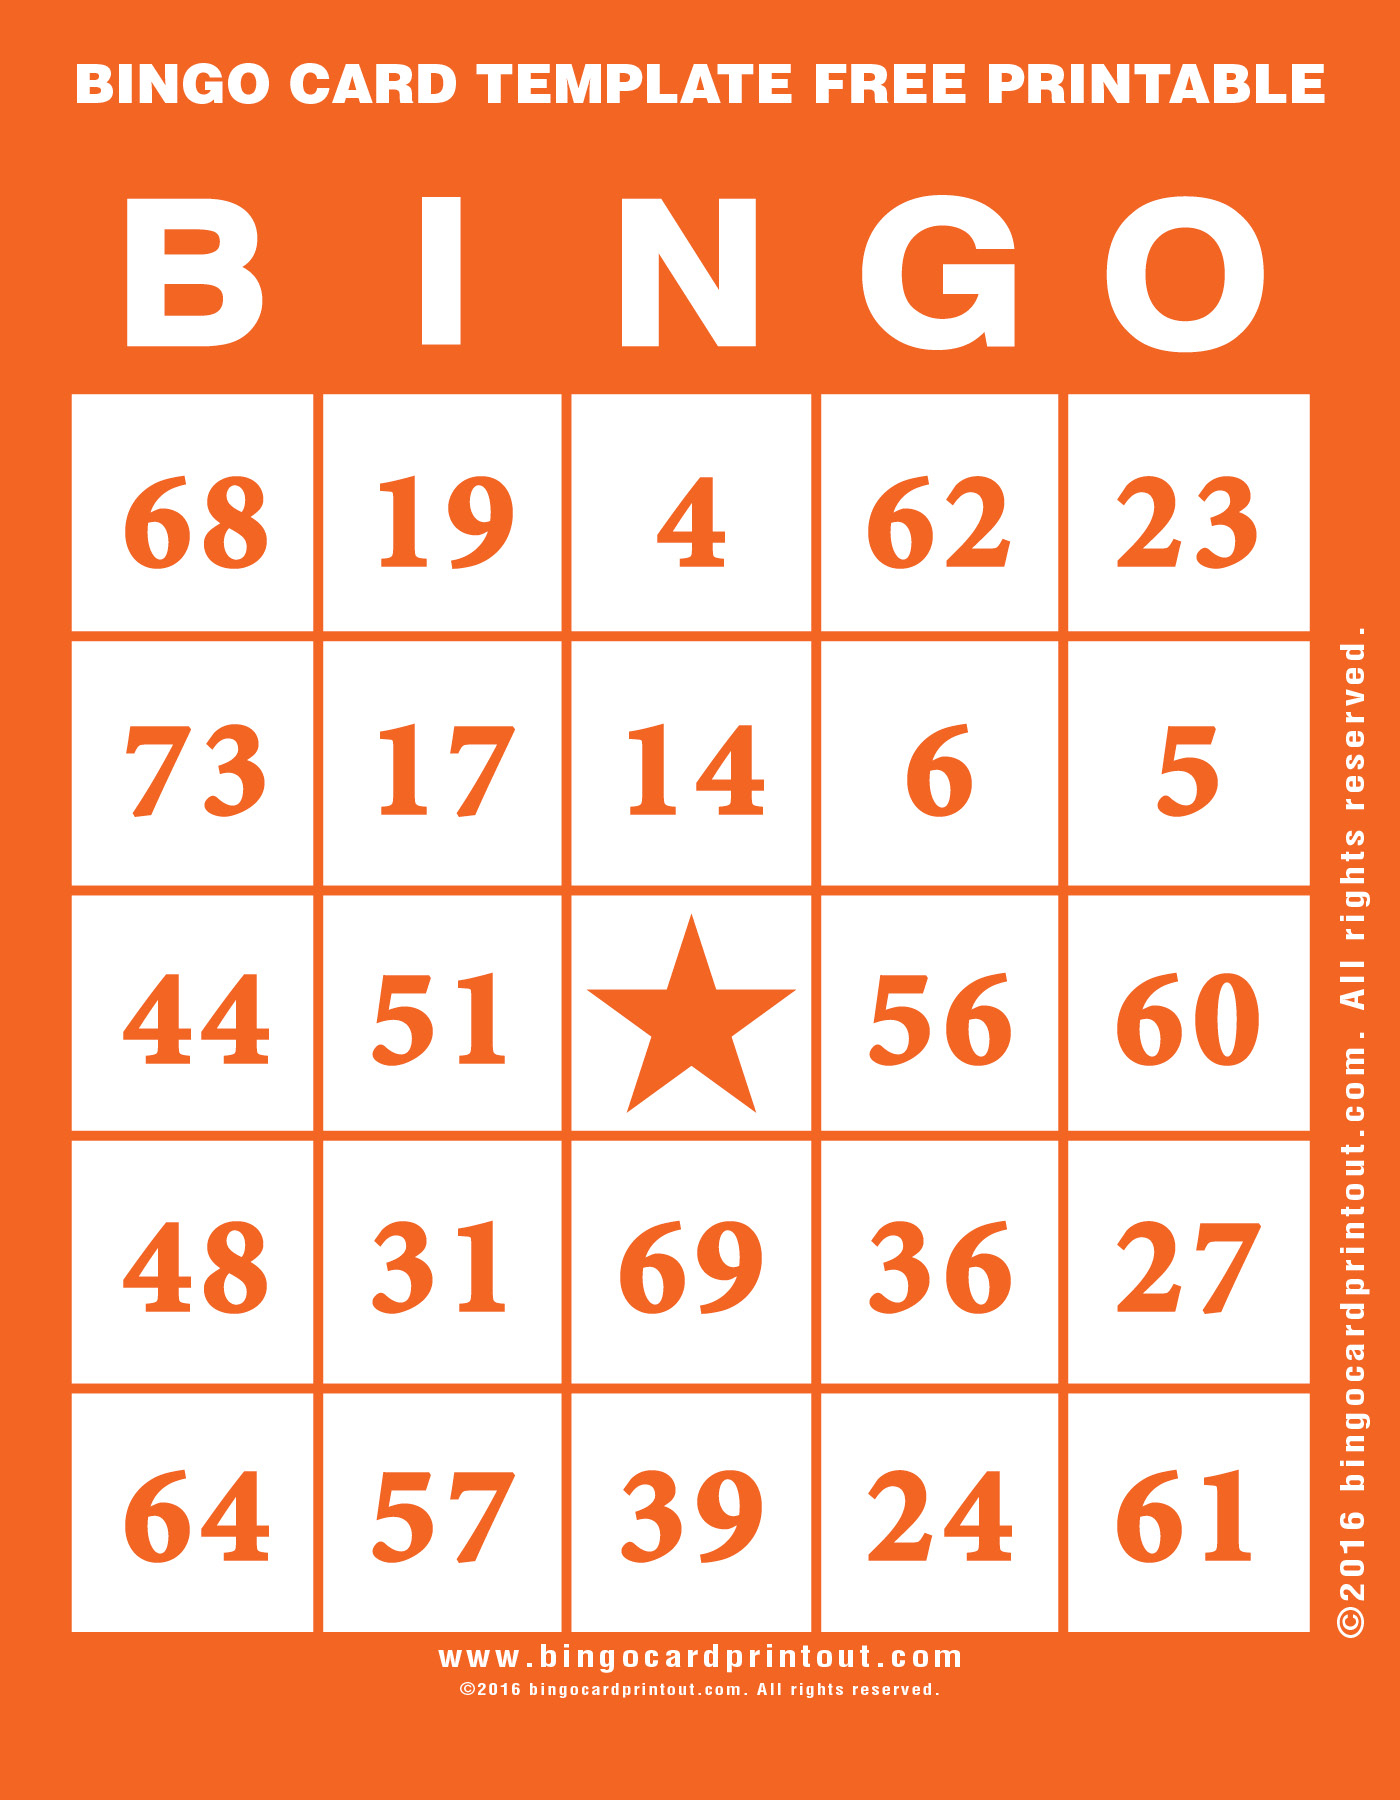 Bingo Card Template Free Printable - Bingocardprintout - Free Printable Bingo